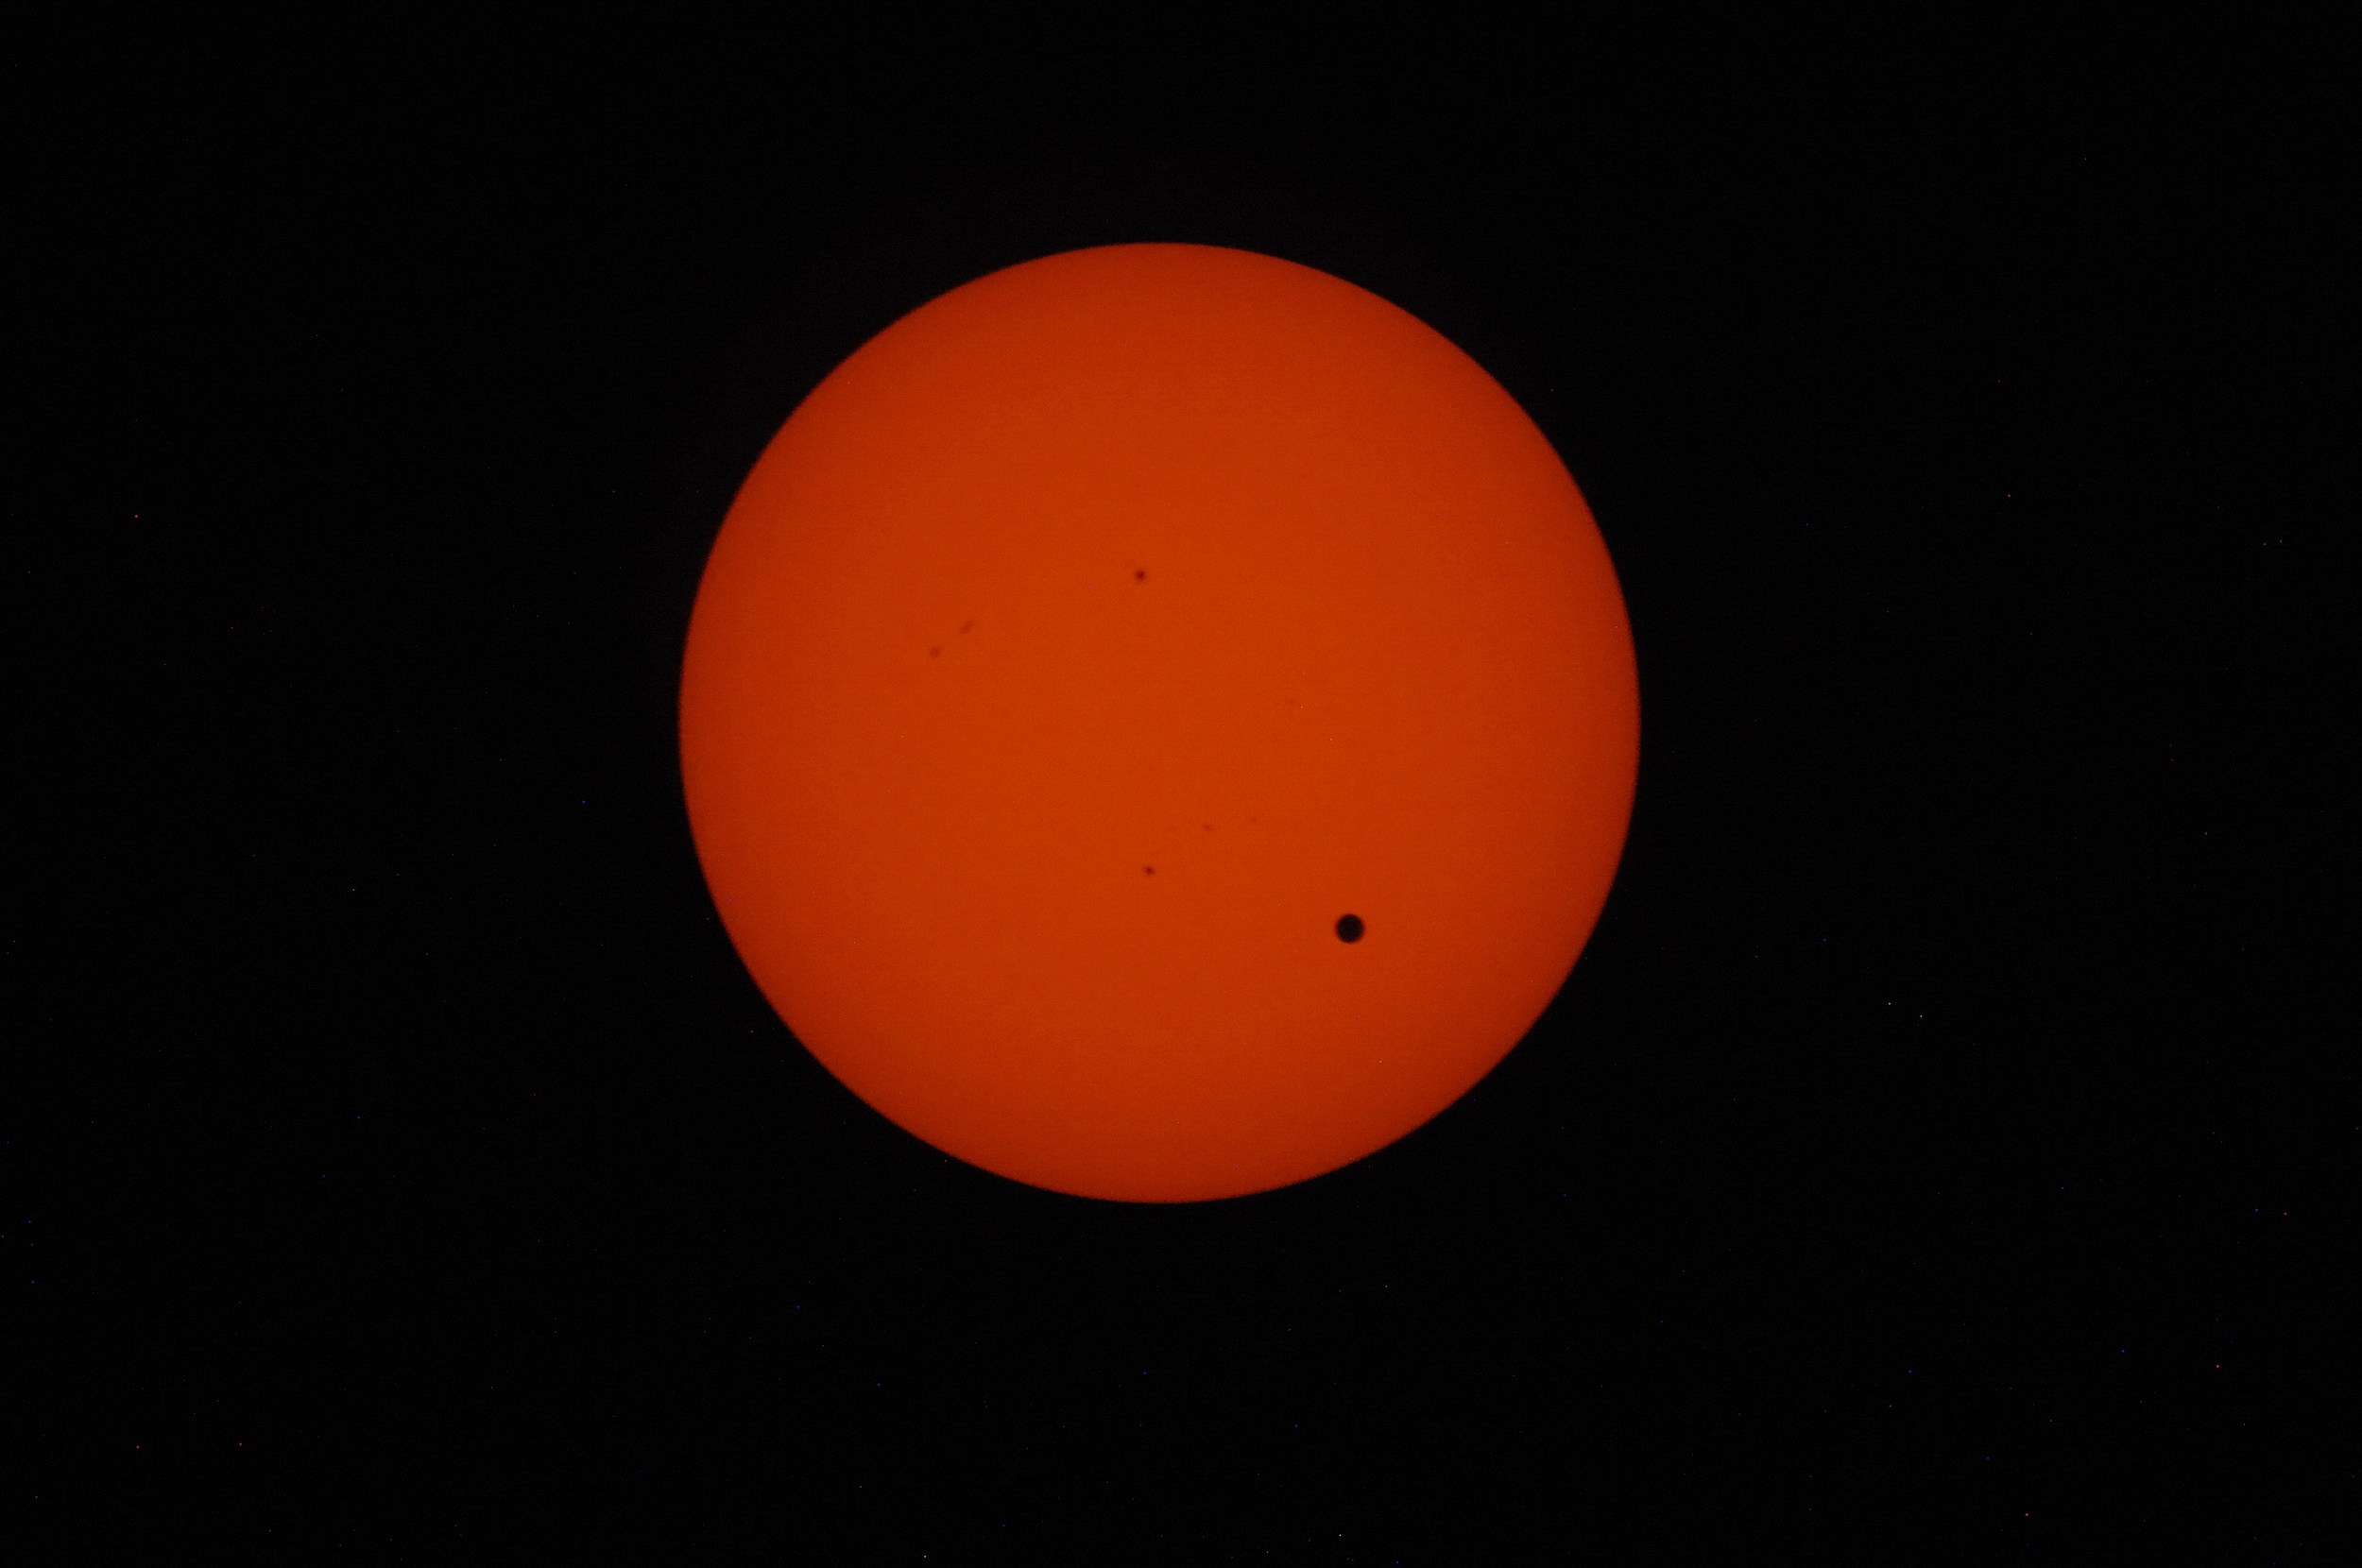 Восхождение Венеры на фоне Солнца в объективе членов экспедиции <nobr class="_">МКС-32</nobr>